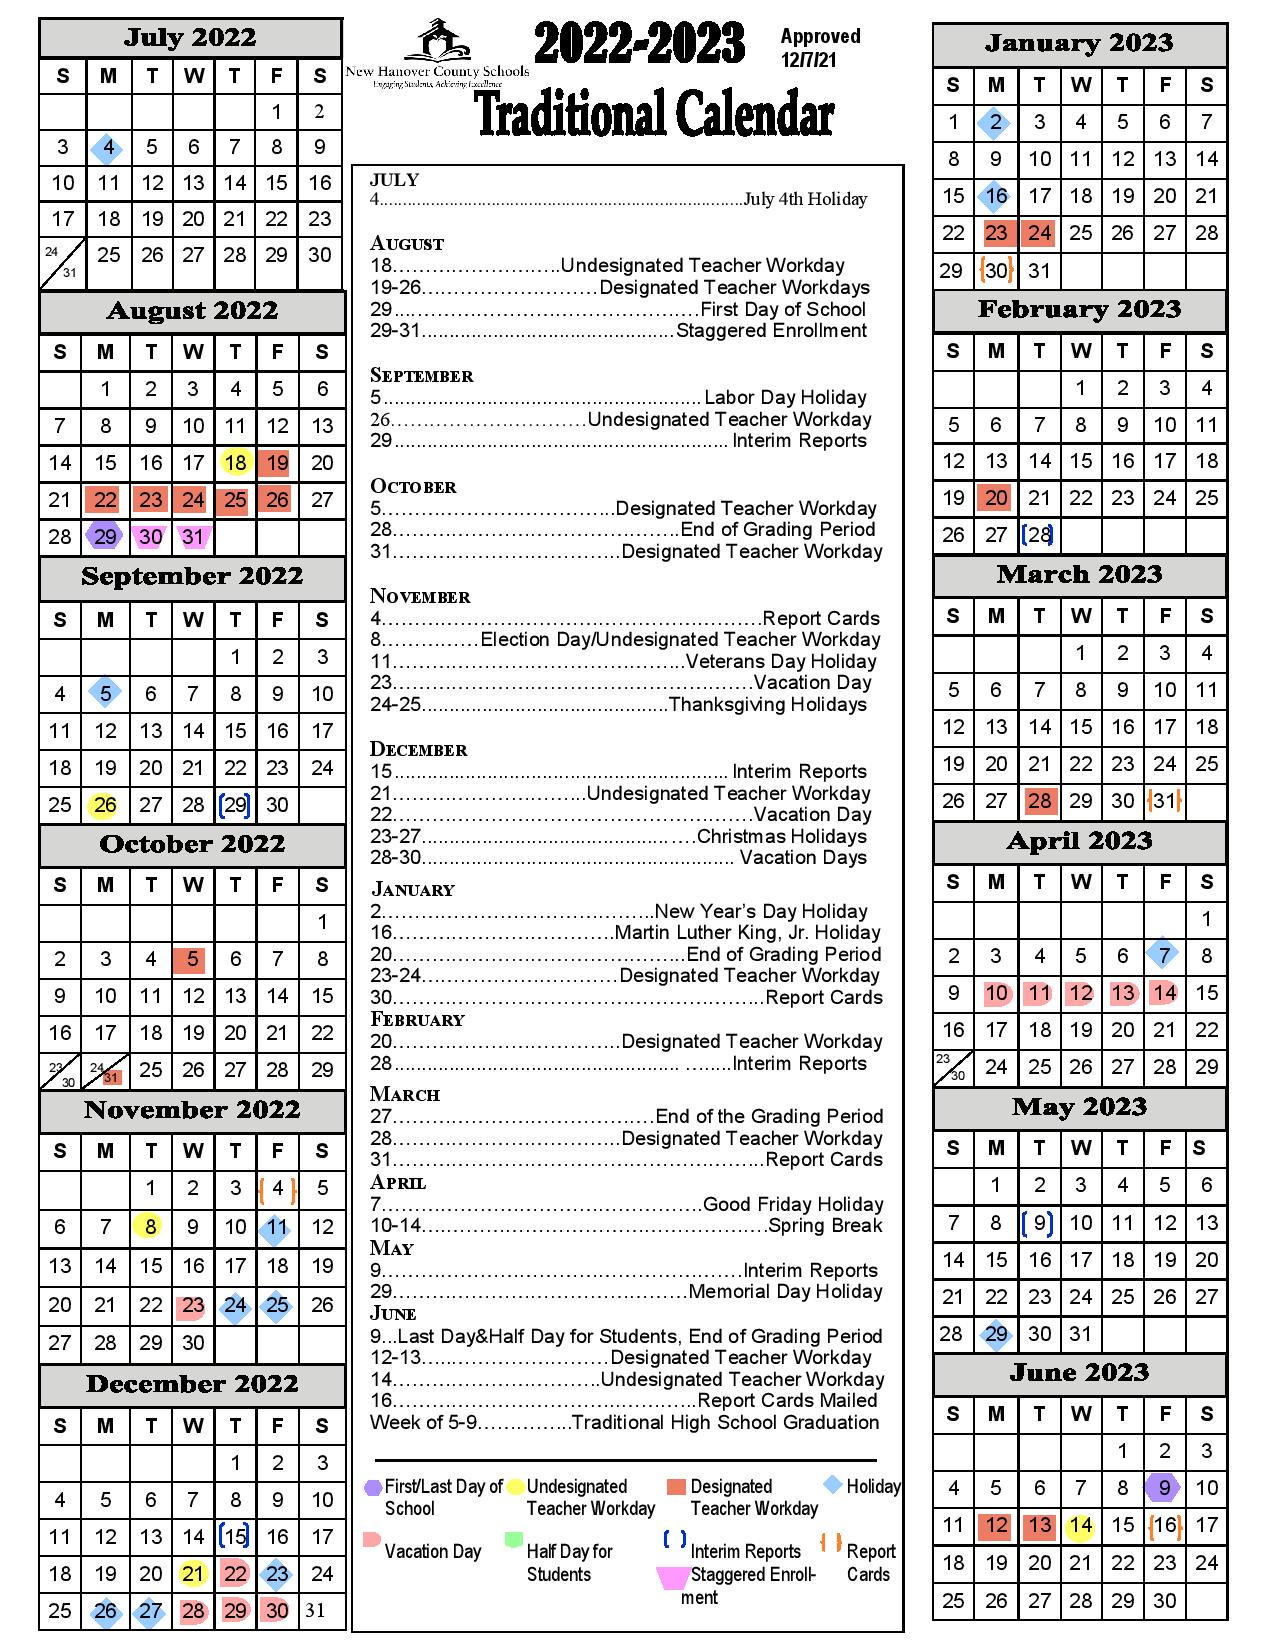 New Hanover County Schools Calendar 2022-2023